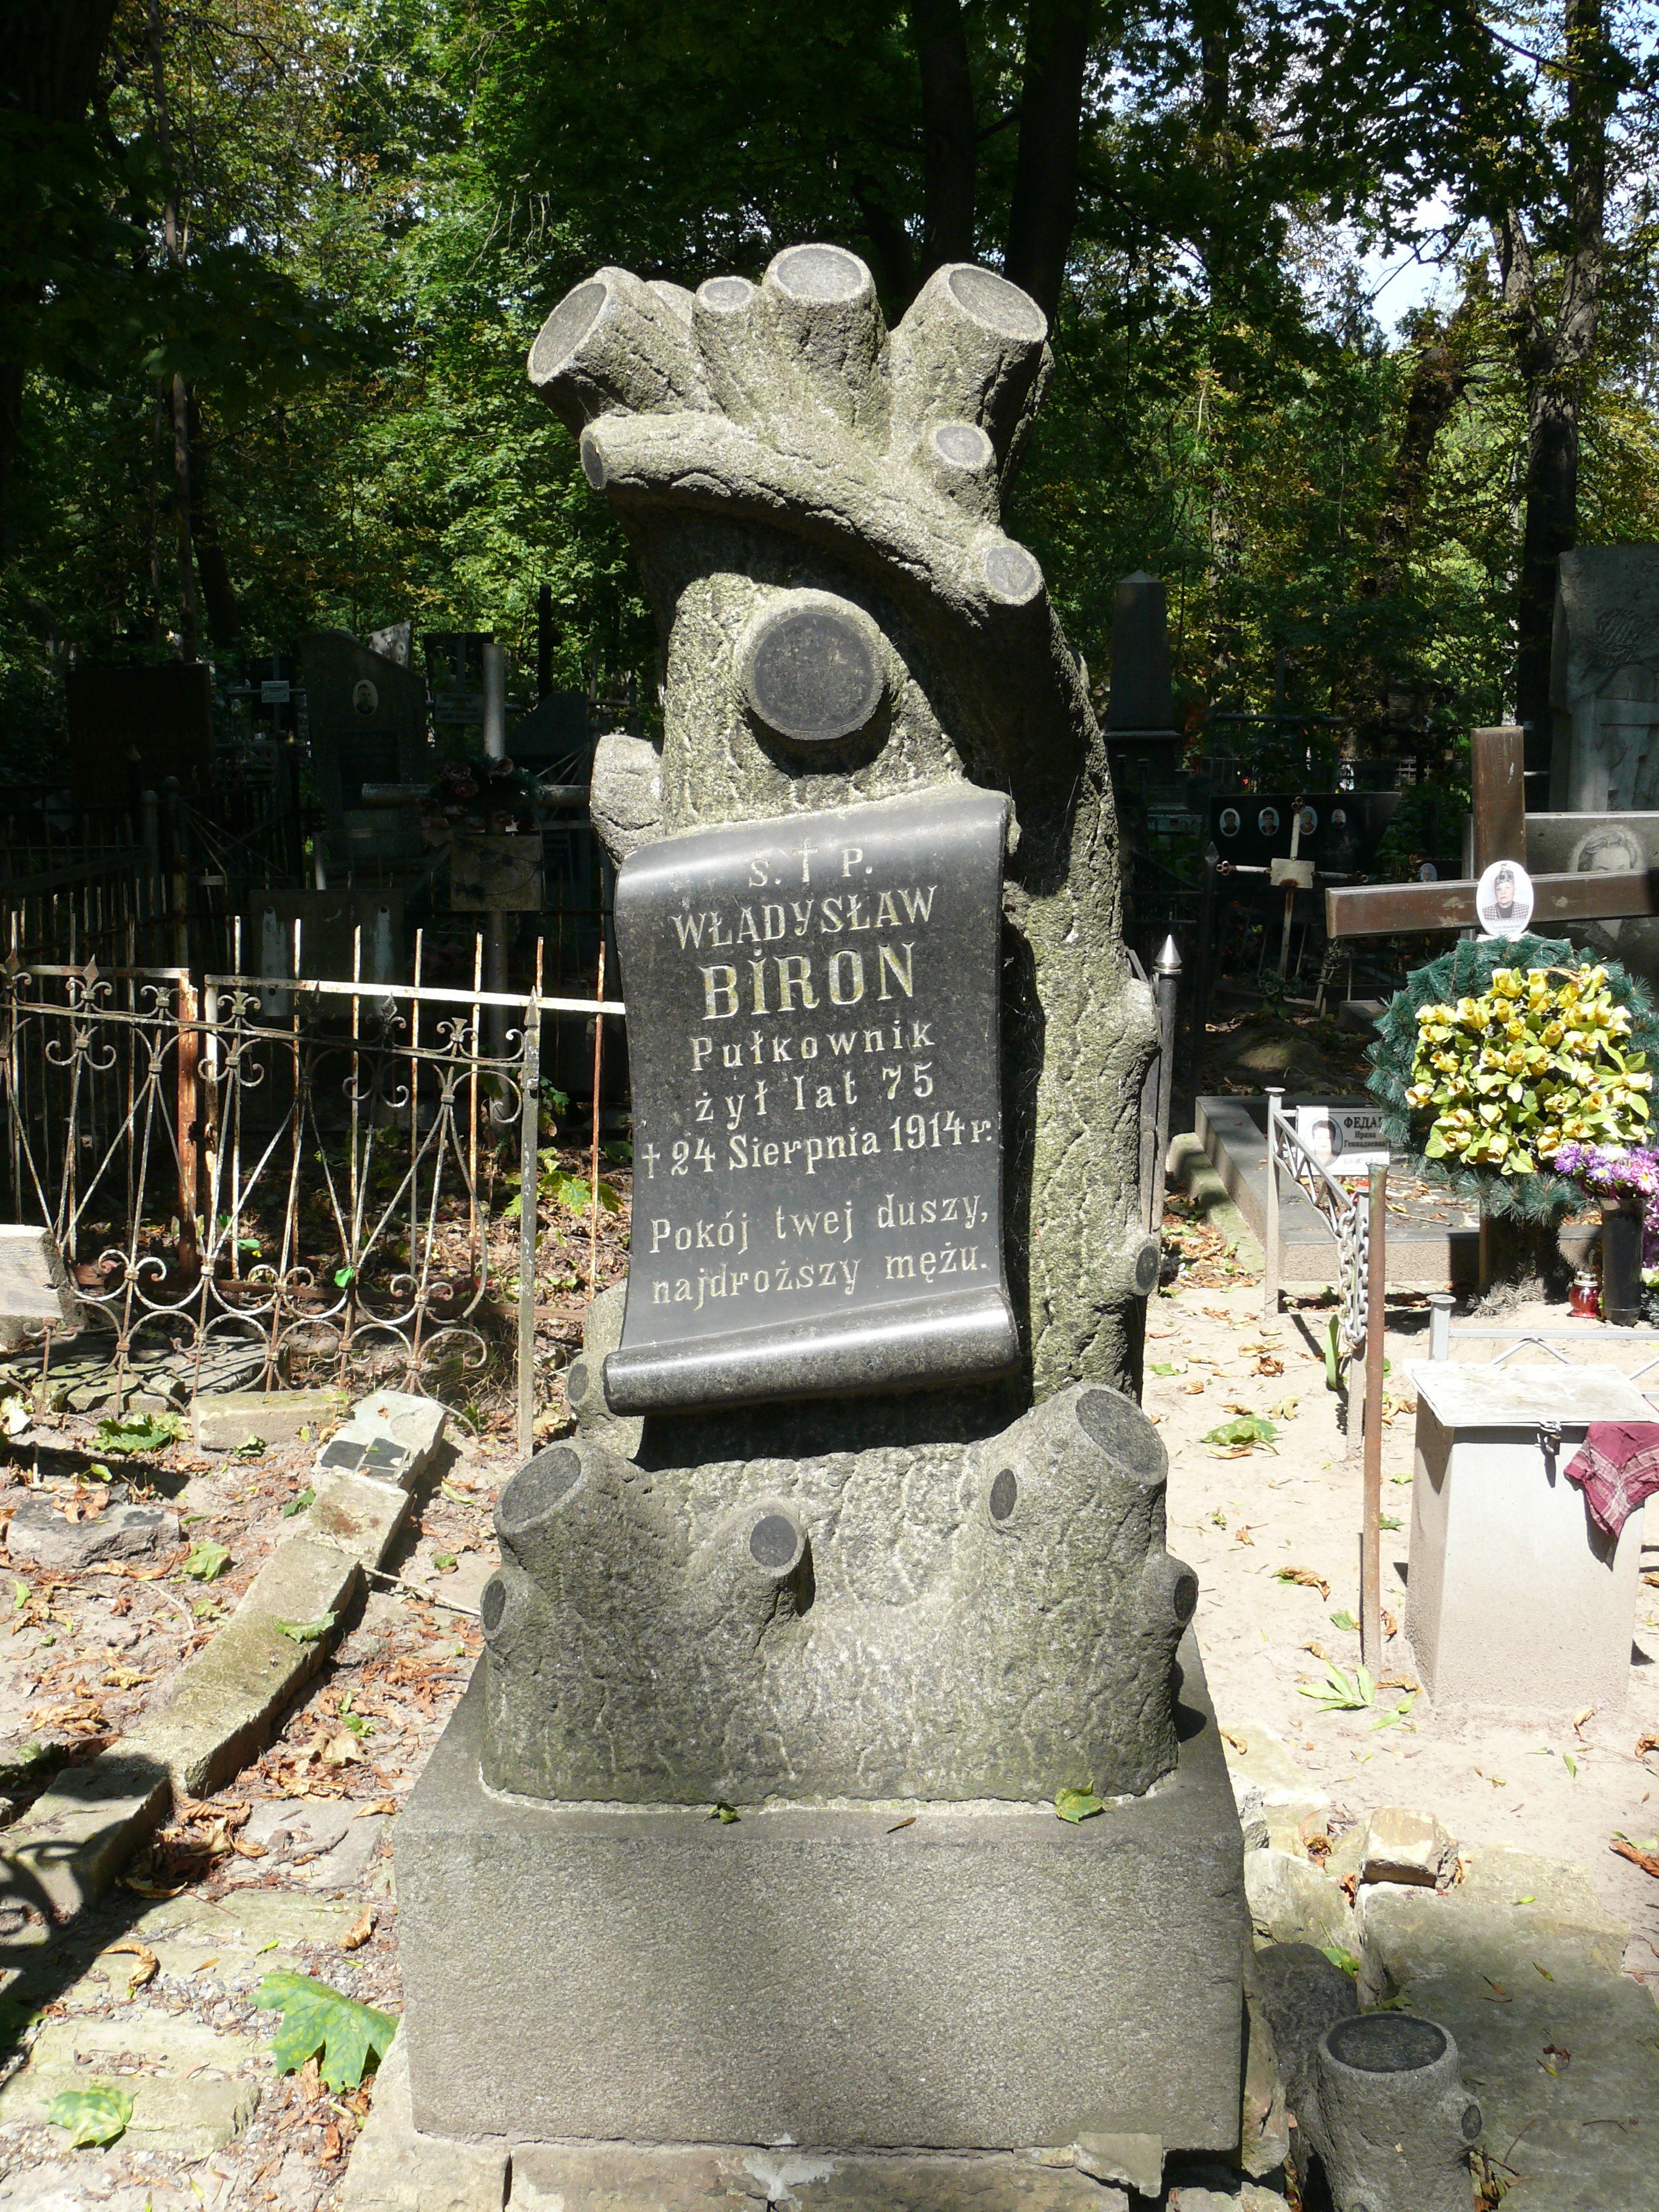 Tombstone of Wladyslaw Biron